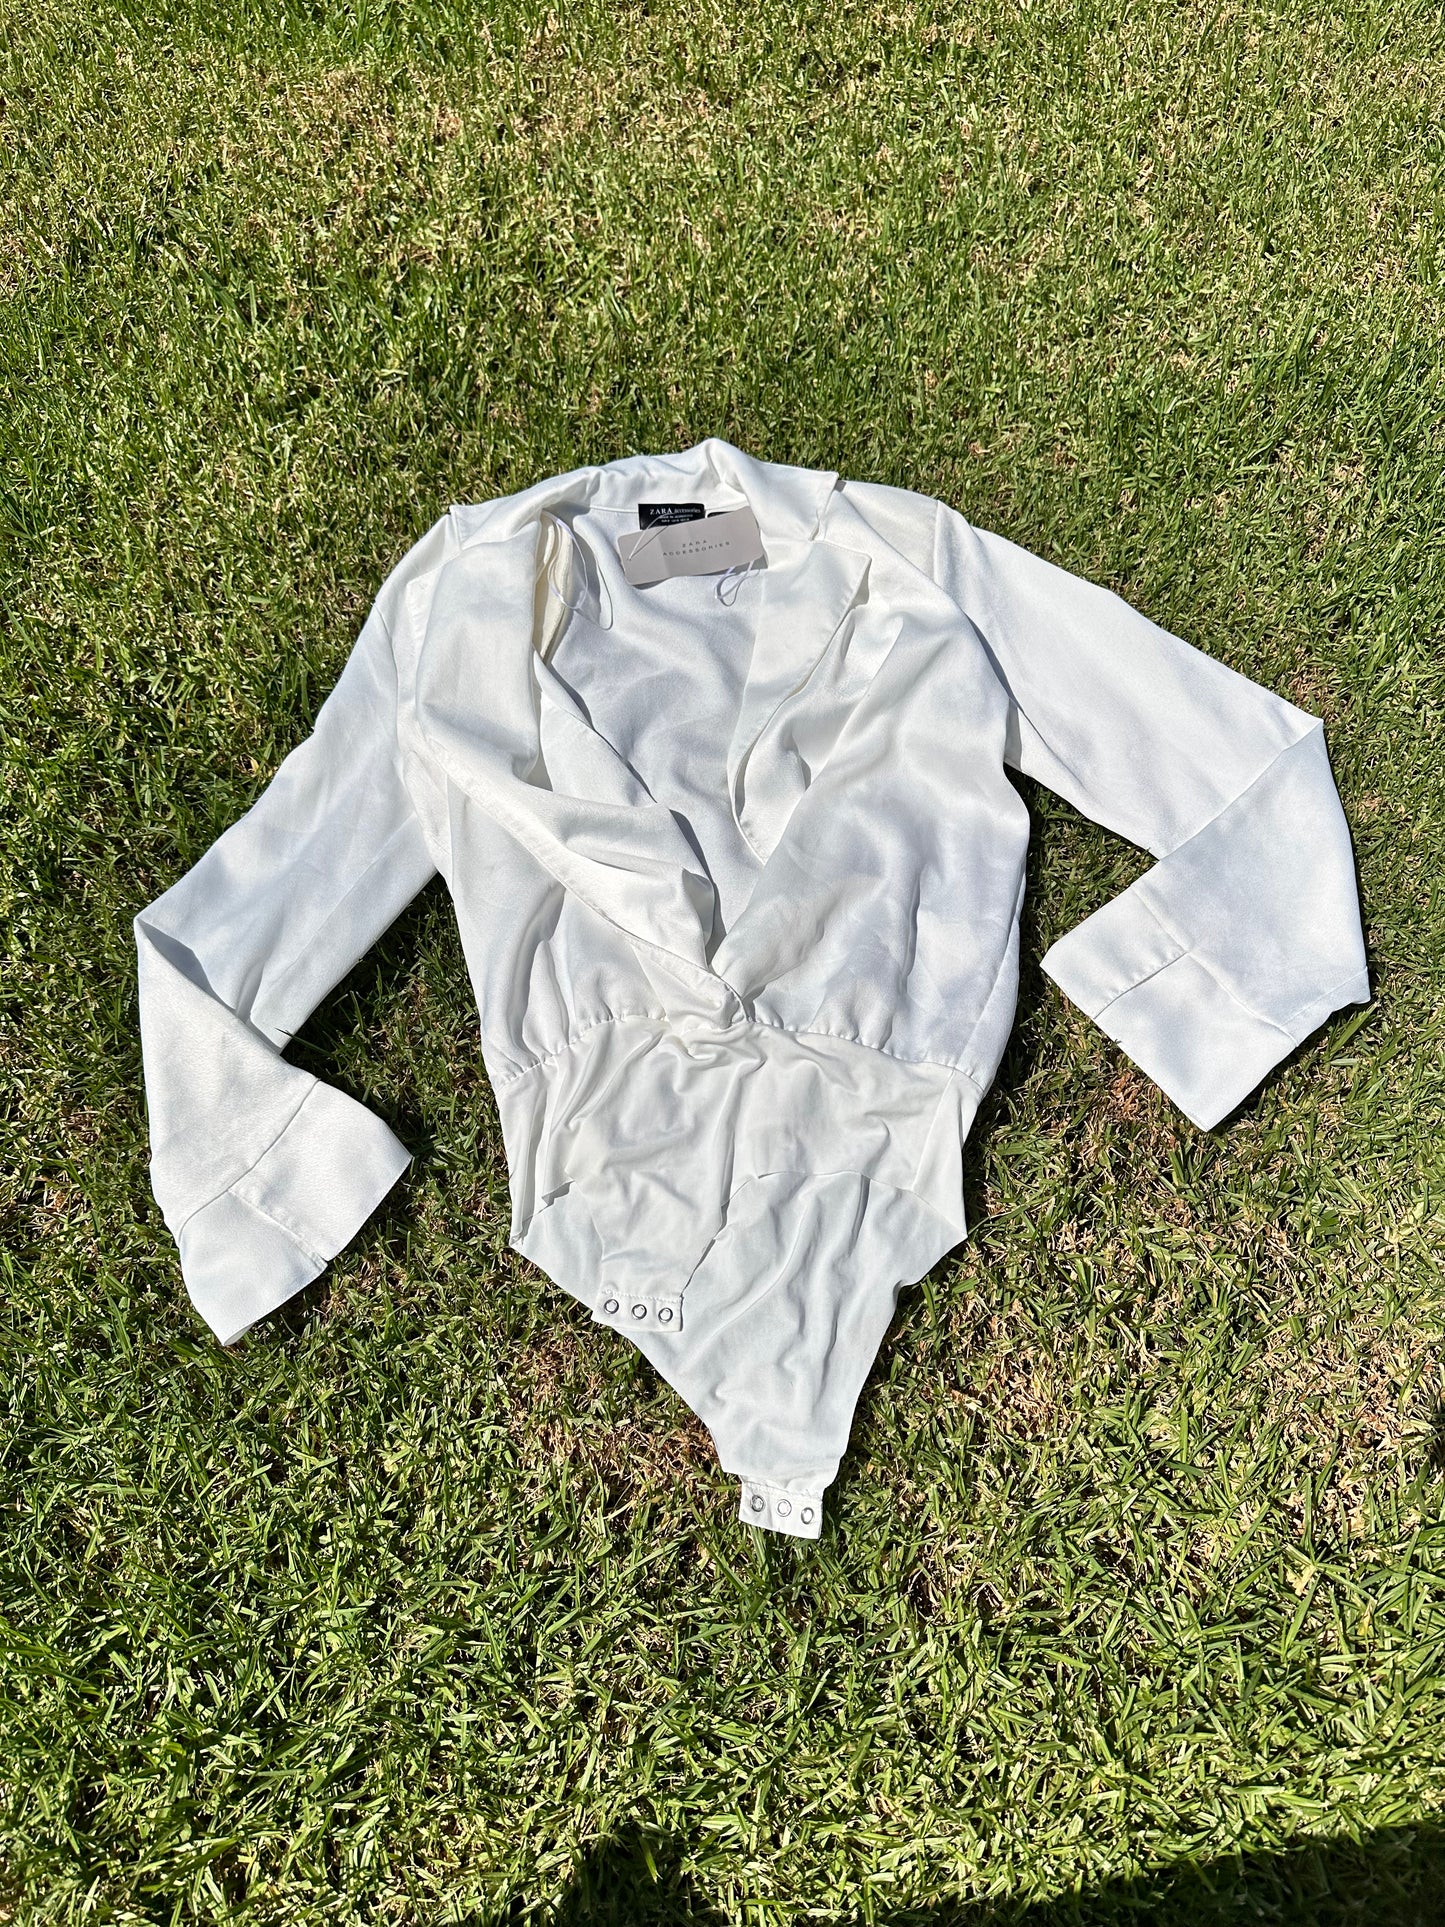 BONES: Dr Brennan's Series Worn Shirt Collection